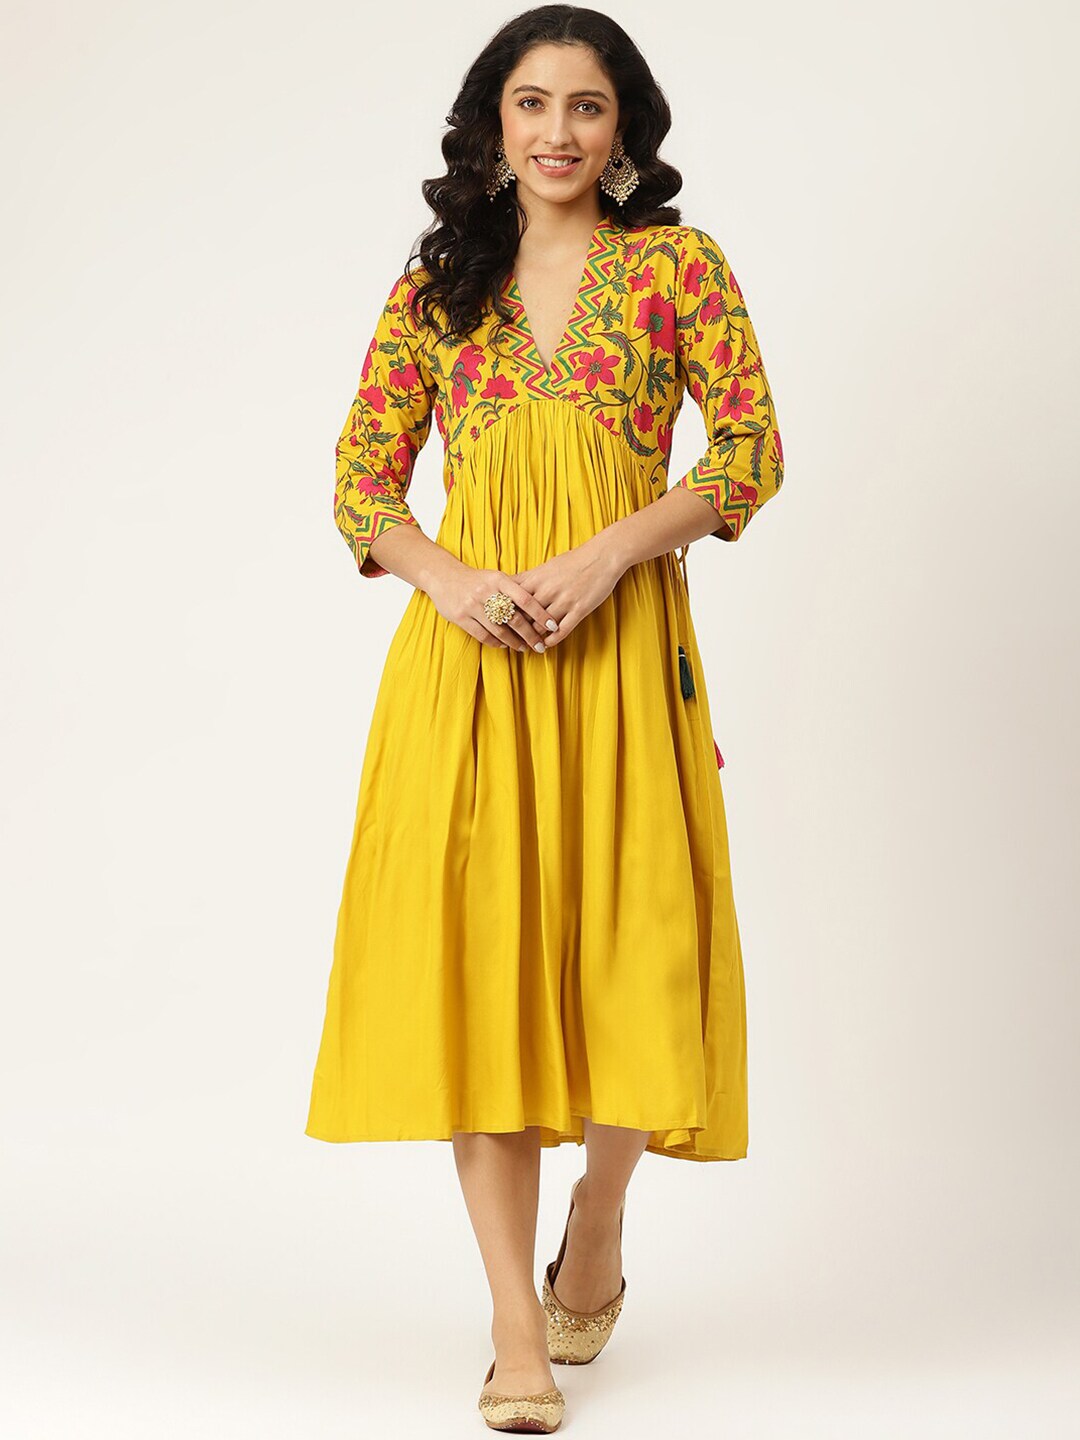 Rustorange Mustard Yellow & Pink Floral Liva A-Line Midi Dress Price in India